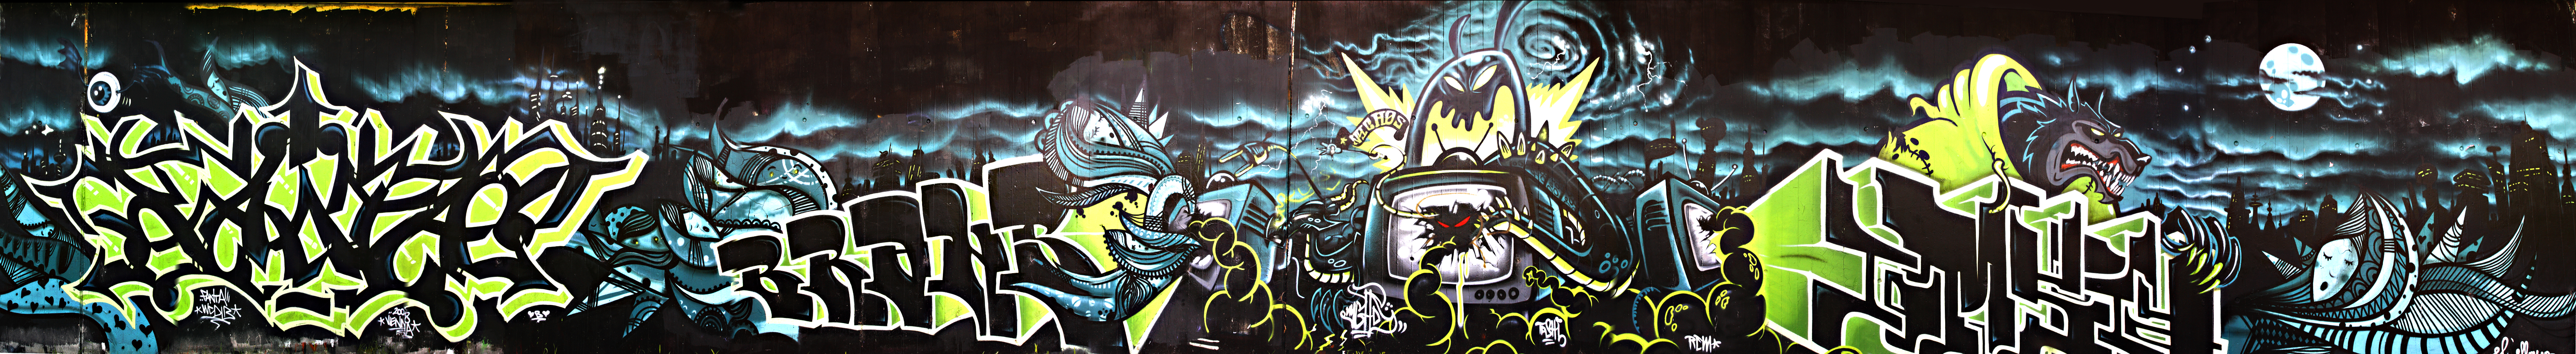 Graffiti PanO